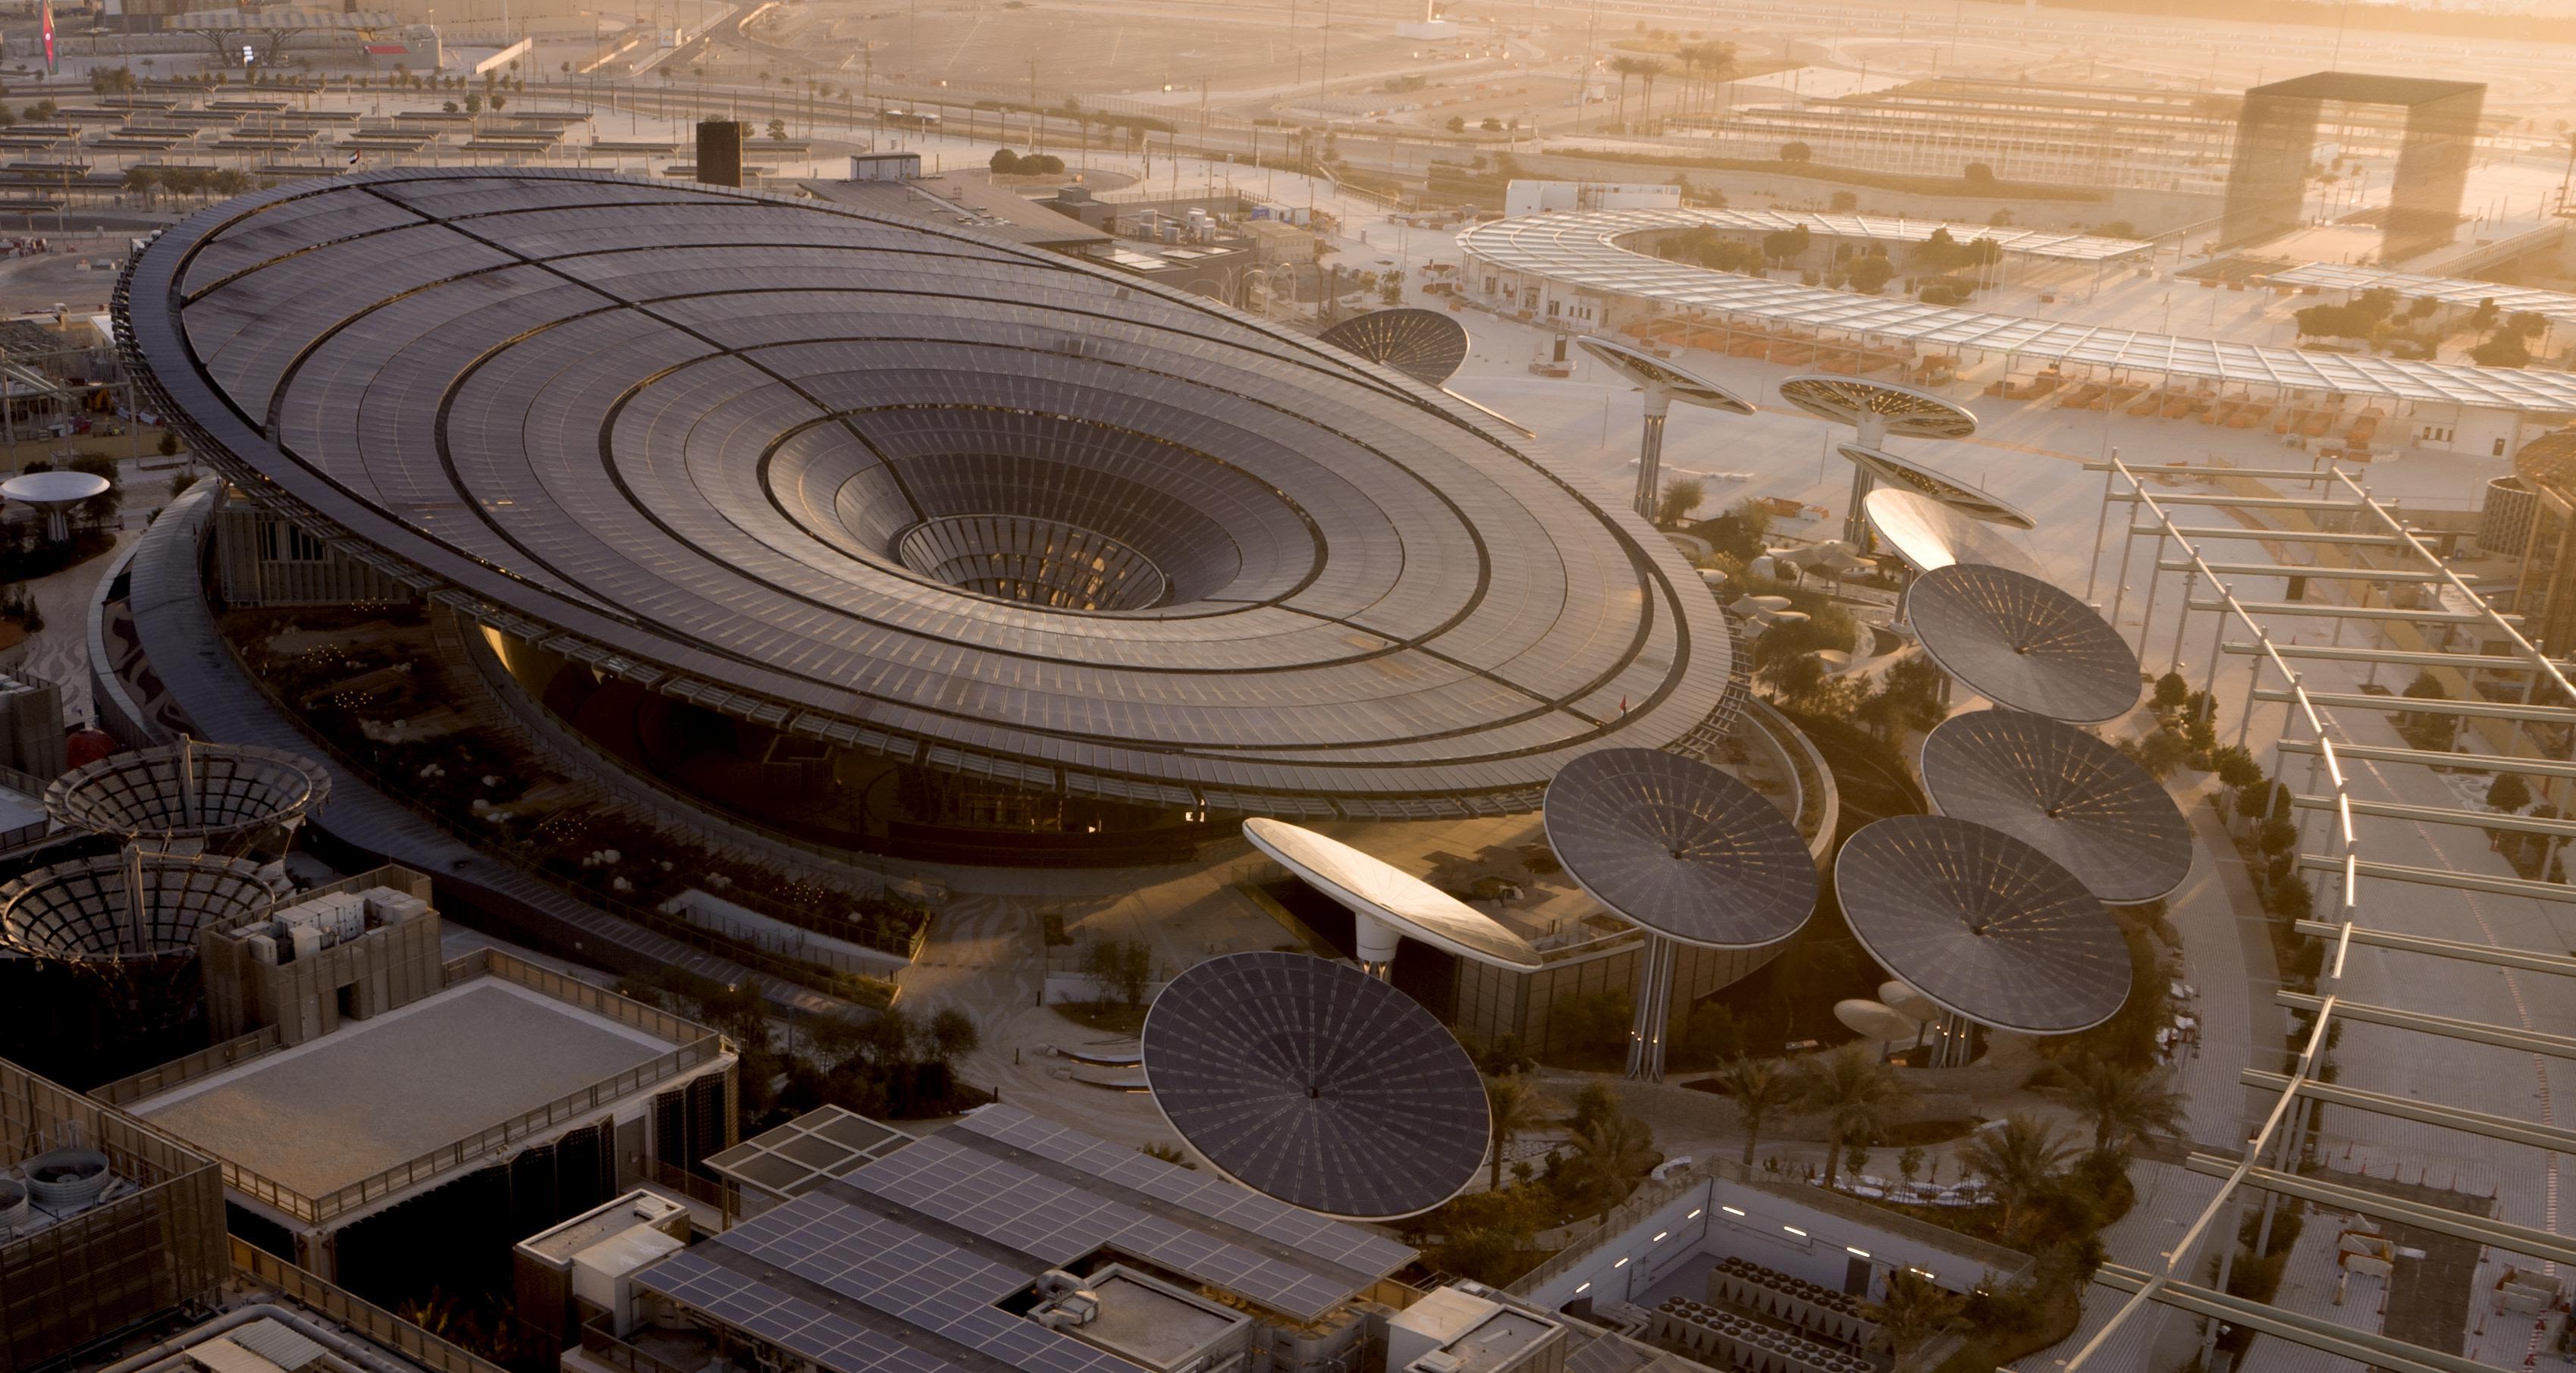 Expo 2020 Dubai Brings the World to Its Doorstep